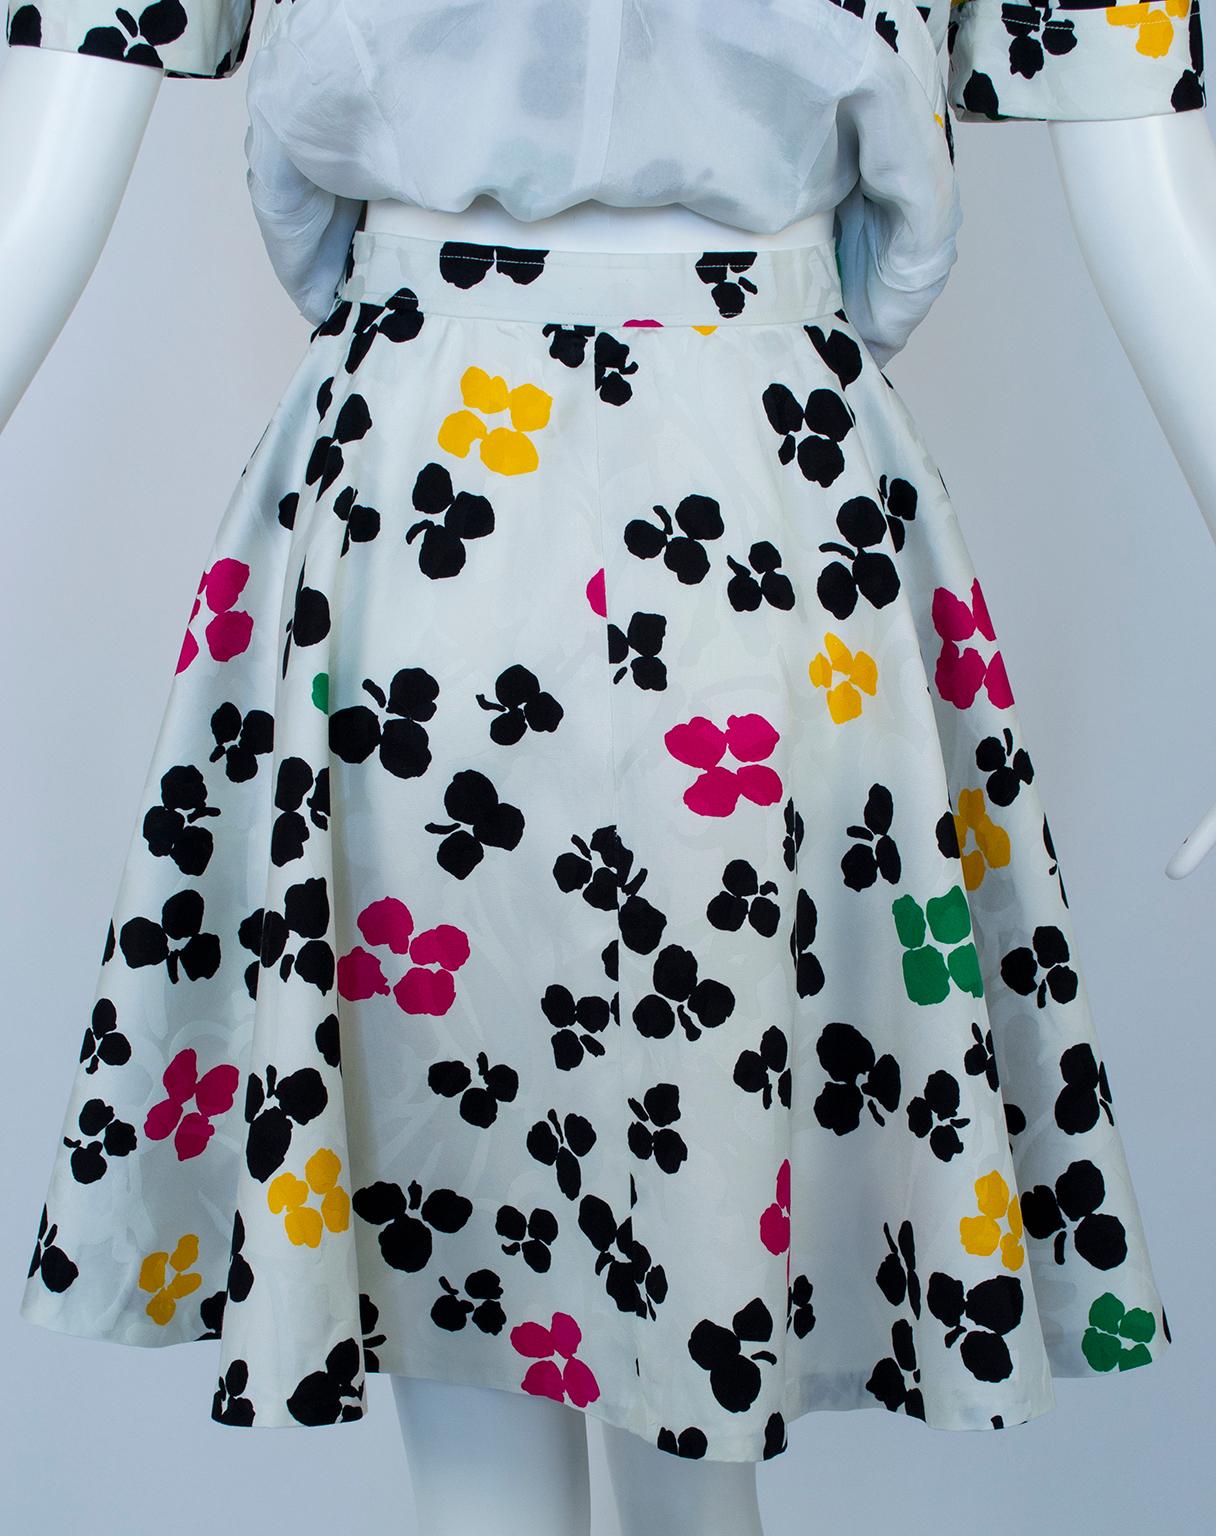 Oscar de la Renta Multicolor Floral Short Sleeve Ballerina Skirt Suit - M, 1980s For Sale 4